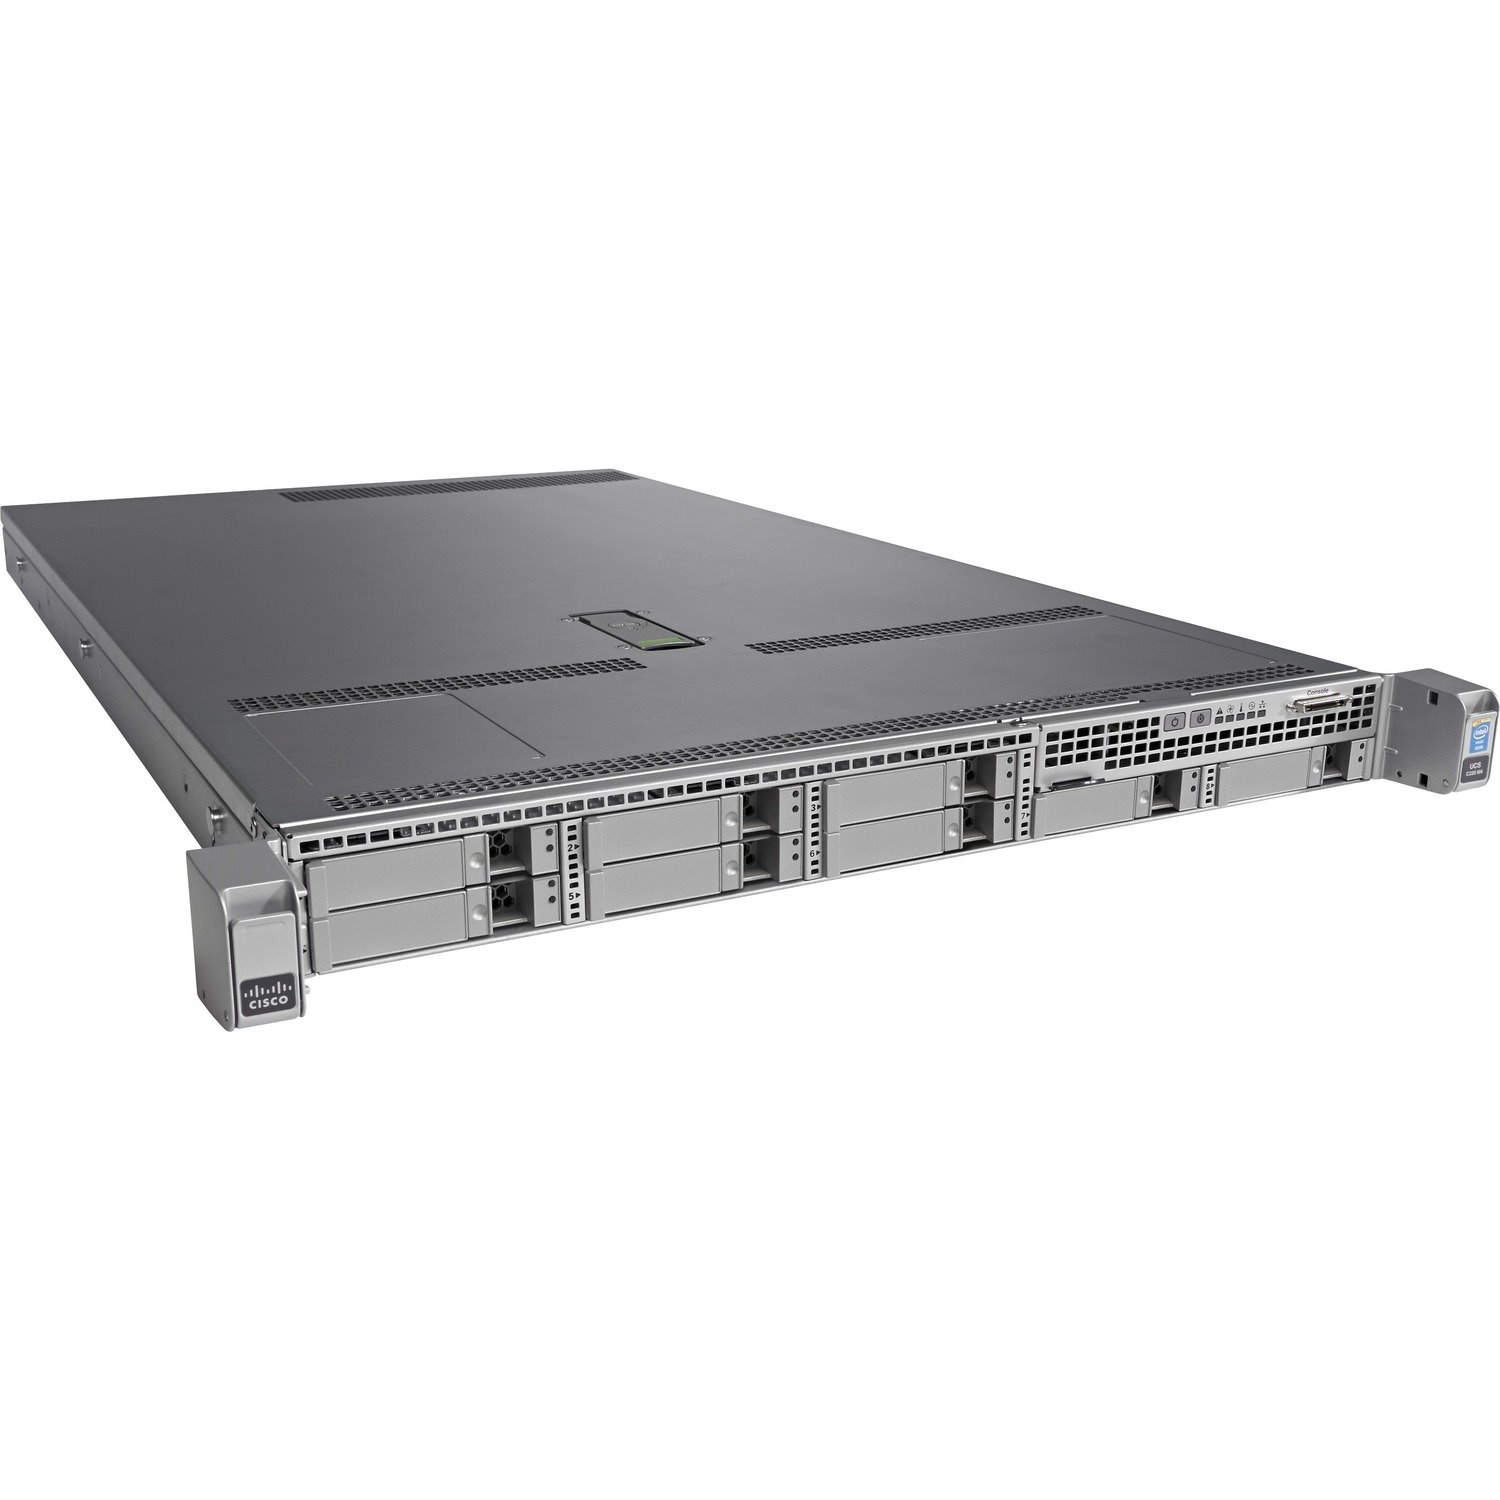 Cisco C220 M4 Rack Server - 2 x Intel Xeon E5-2620 v3 2.40 GHz - 64 GB RAM - 12Gb/s SAS, Serial ATA Controller